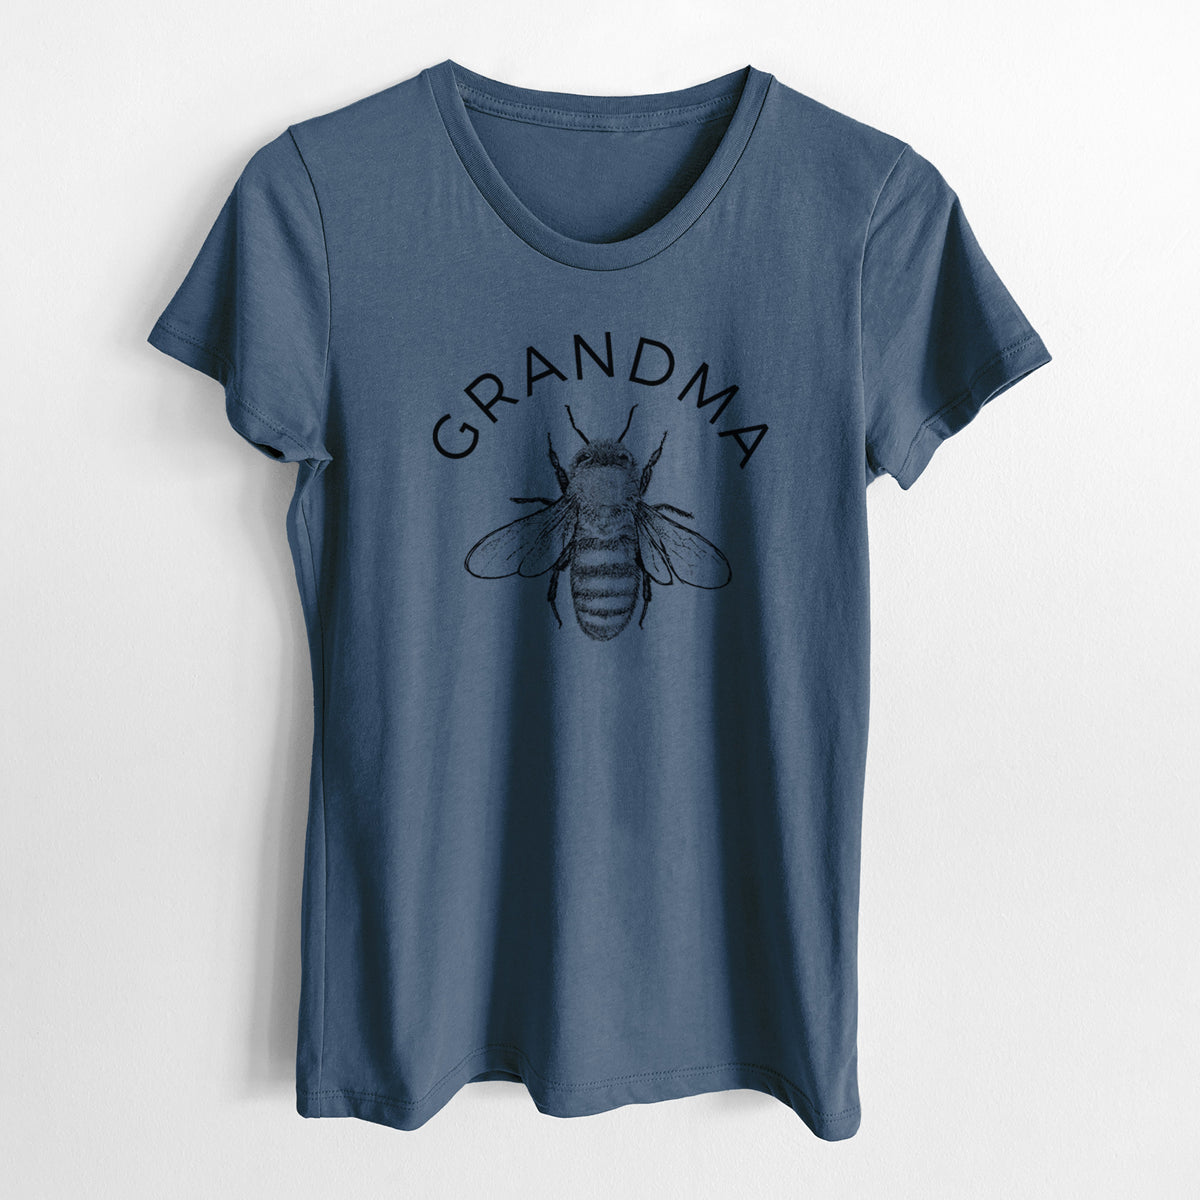 Grandma Bee - Women&#39;s Crewneck - Made in USA - 100% Organic Cotton